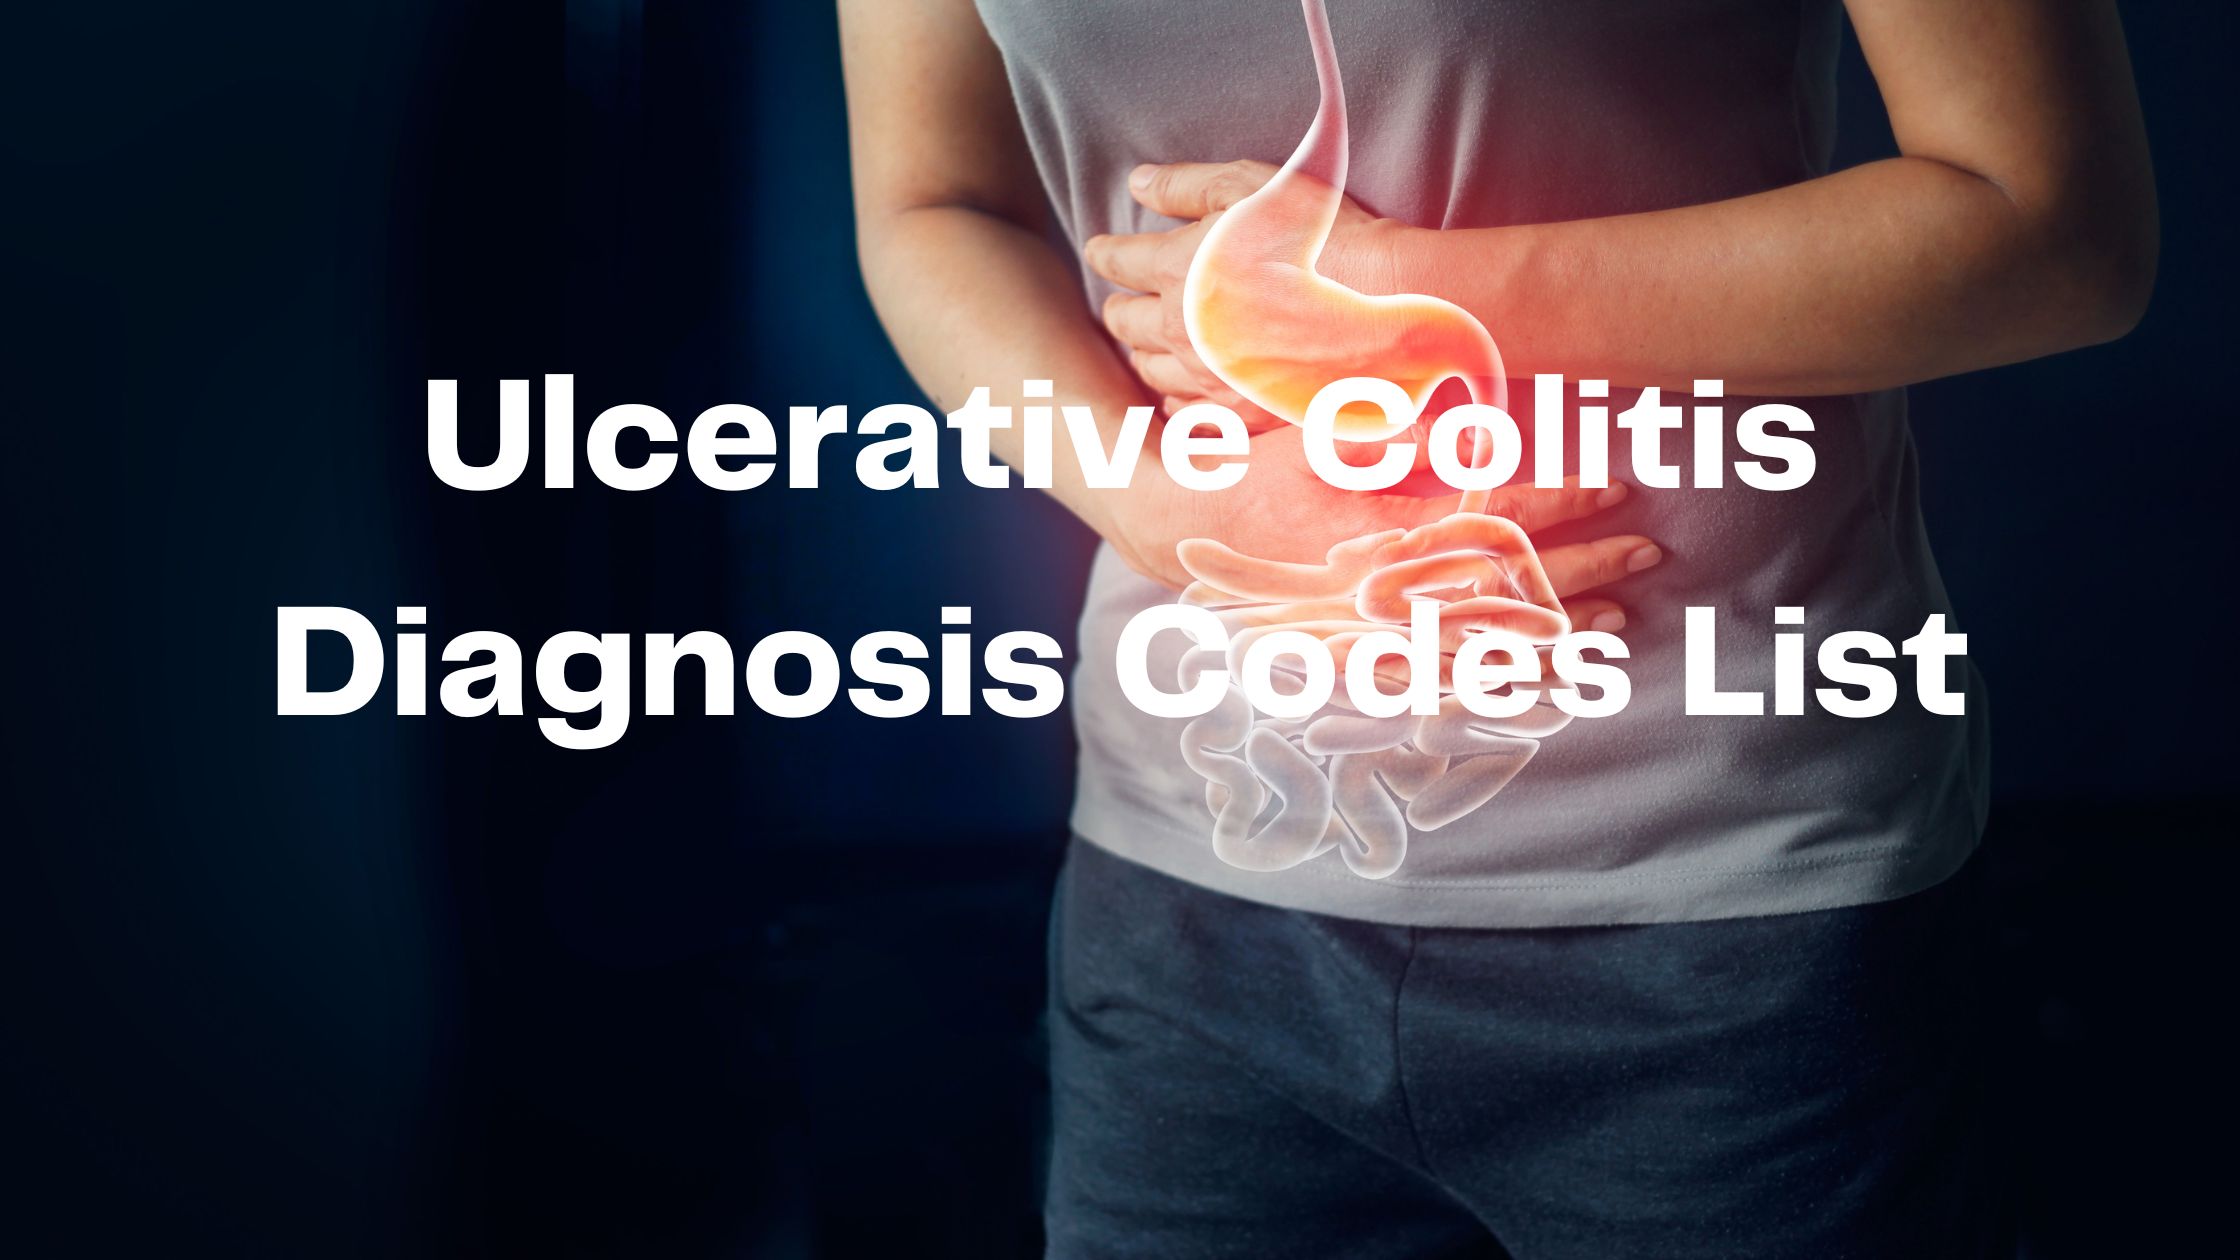 Ulcerative Colitis icd10 codes list